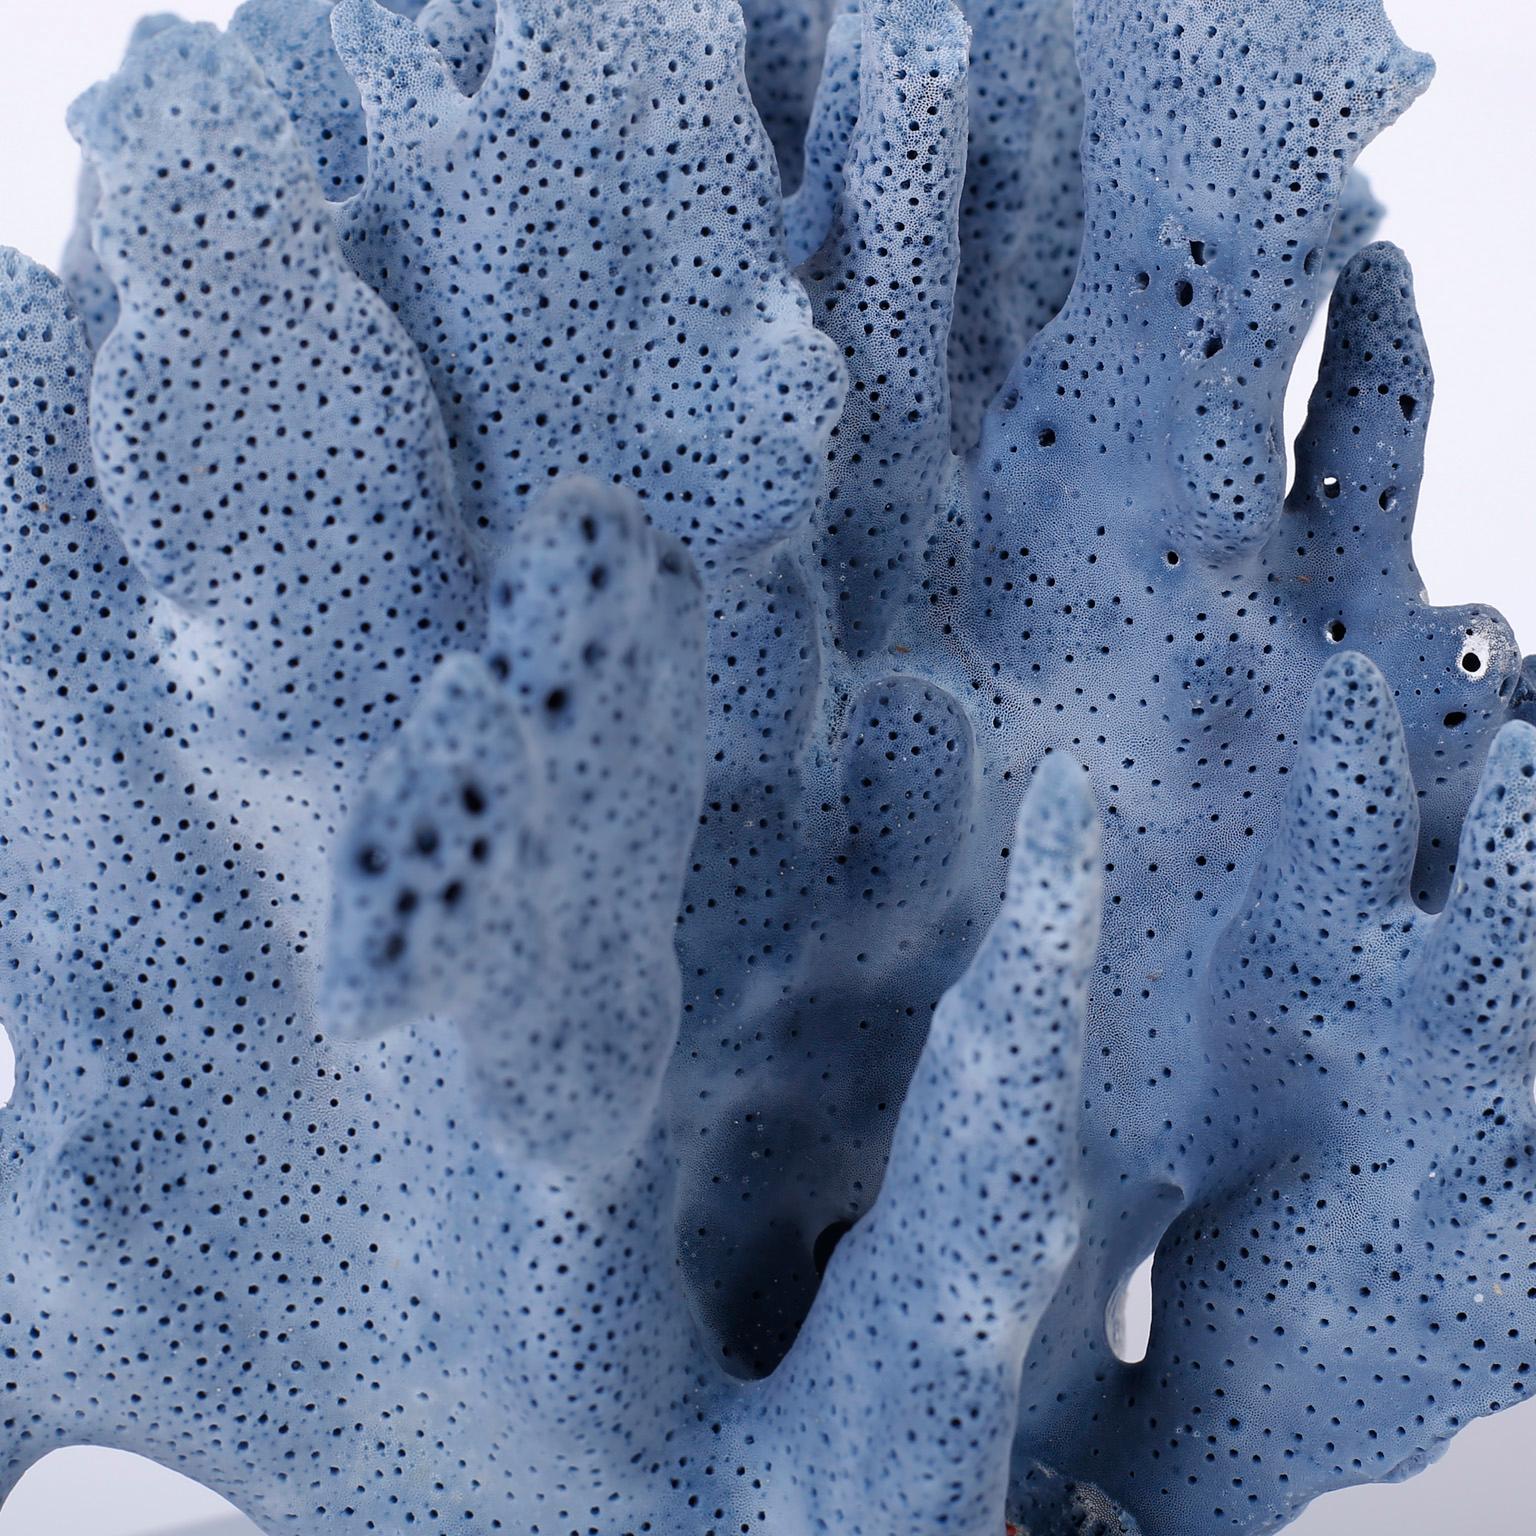 Three Blue Coral Specimens on Lucite (Salomon-Inseln)